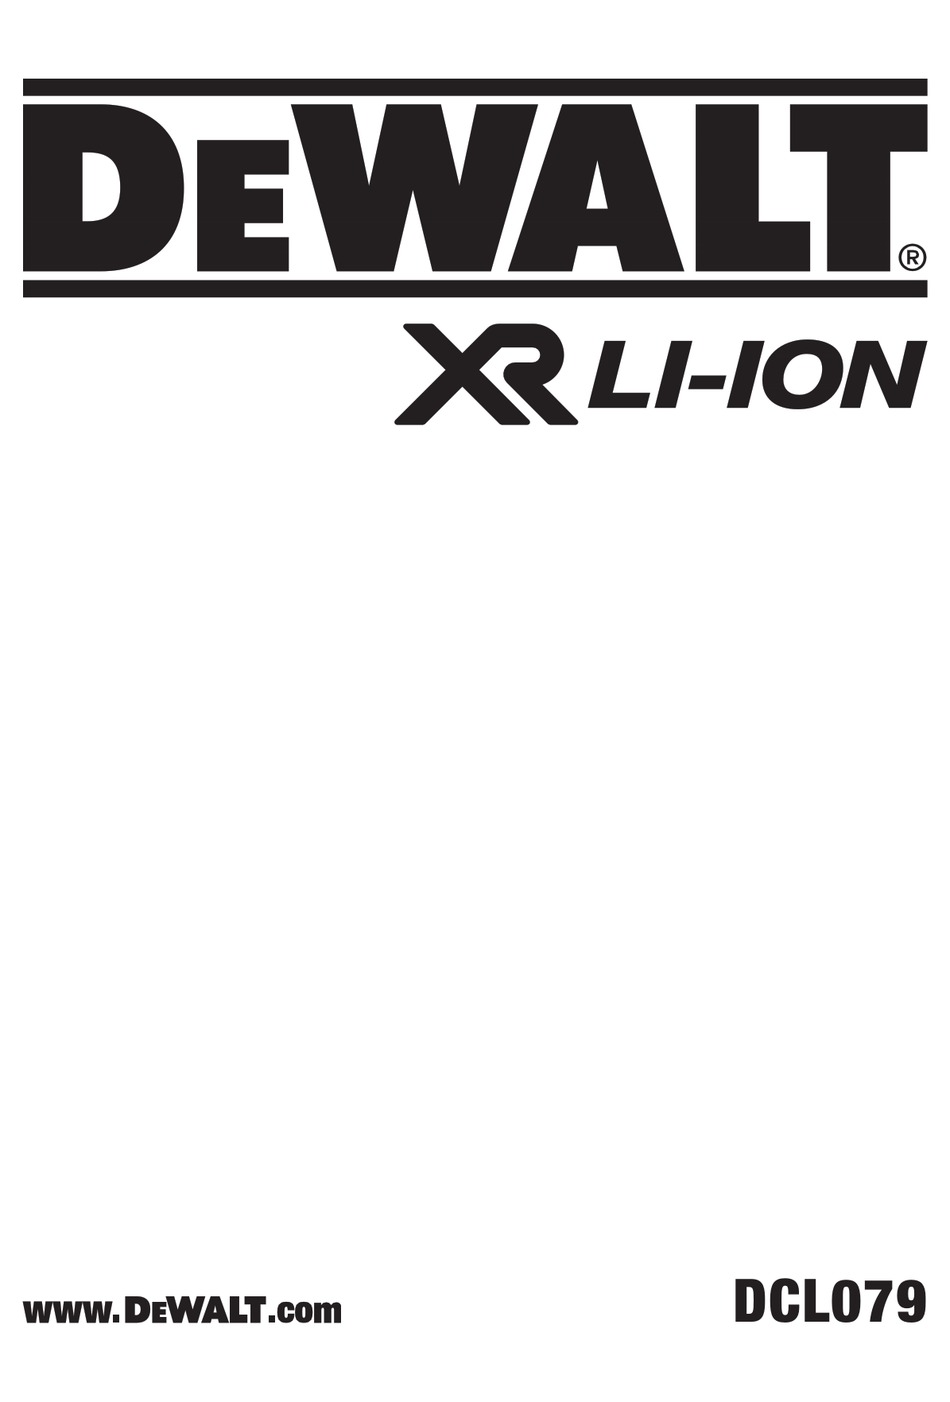 DEWALT DCL079 MANUAL Pdf Download | ManualsLib